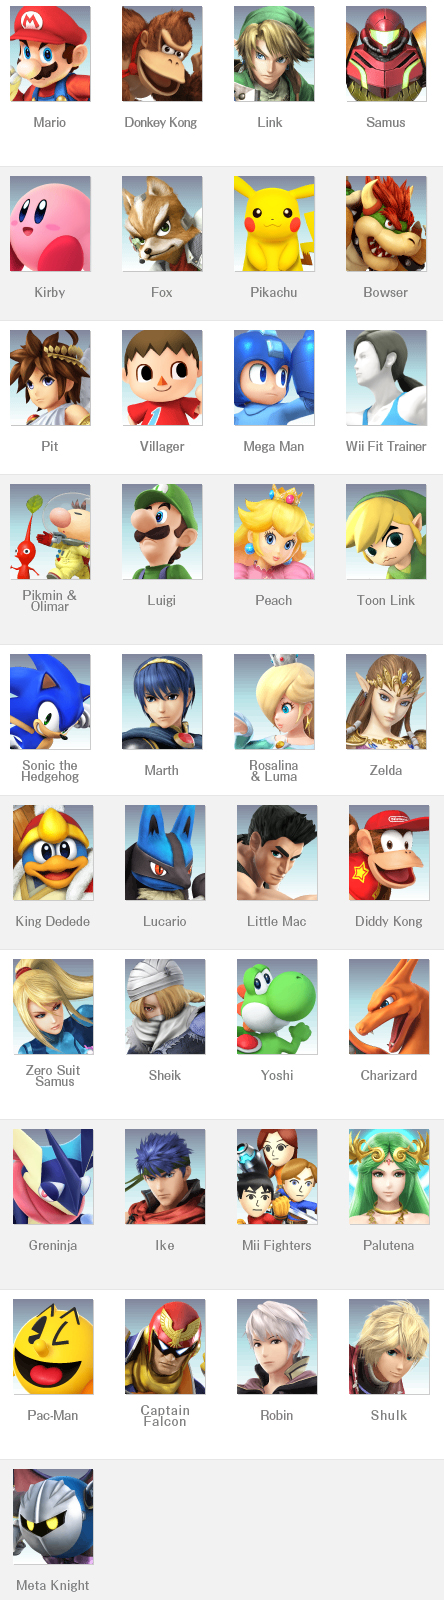 Starting-Roster-Super-Smash-Bros-Wii-U-&-3DS